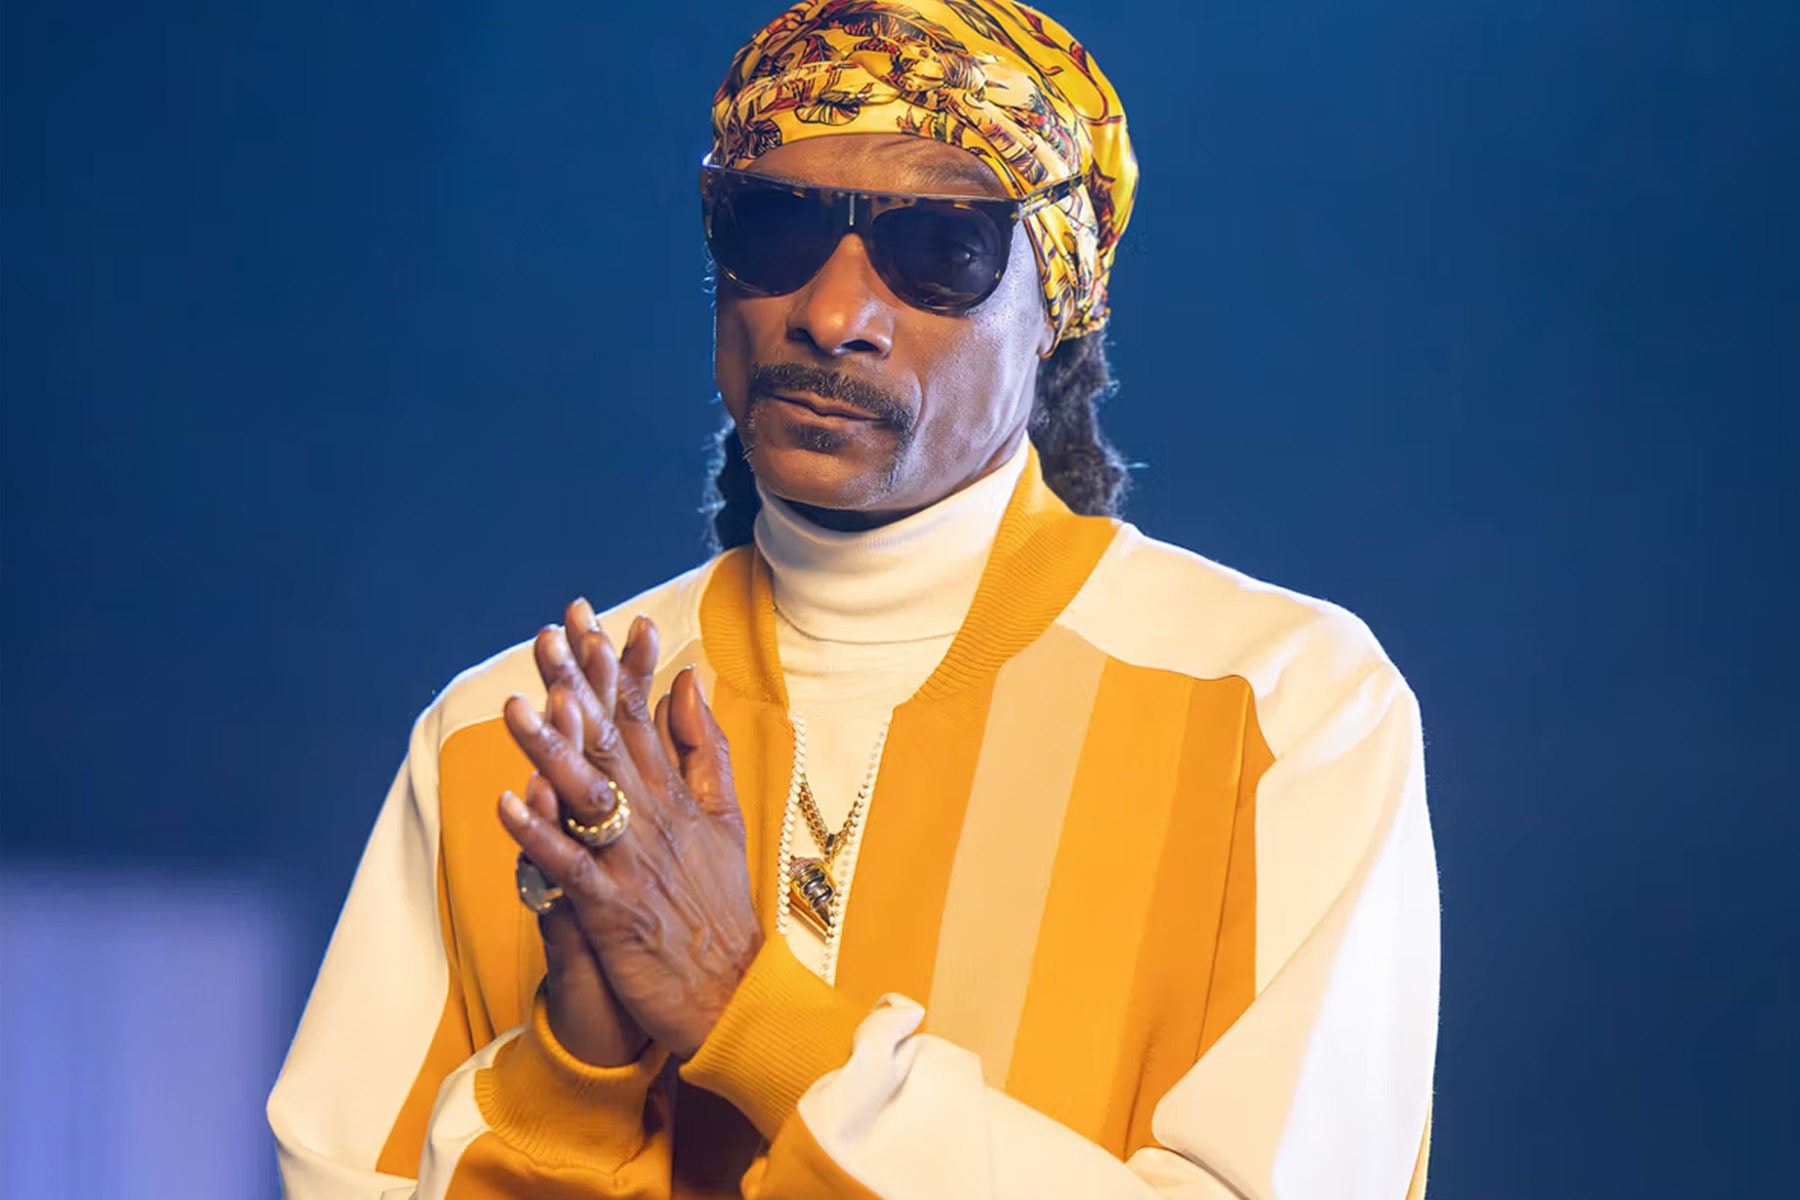 Snoop Dogg 透露自己仅从 Spotify 获得 $4.5 万美元分润